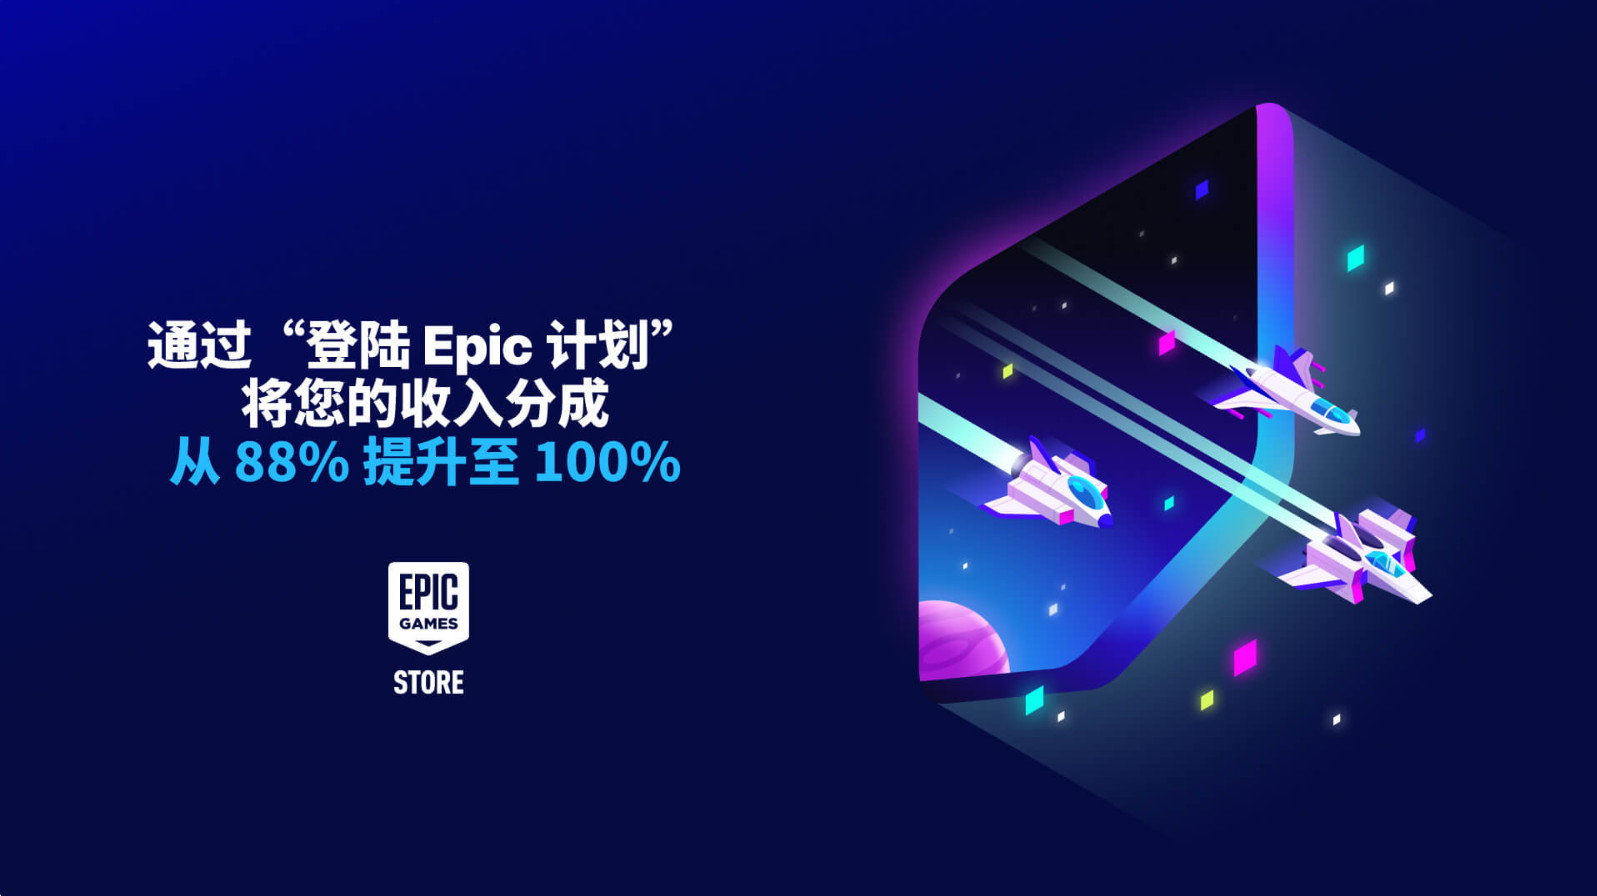 Epic又推新政策“Epic初支”：携老游戏回归 前6个月获100%支进分白